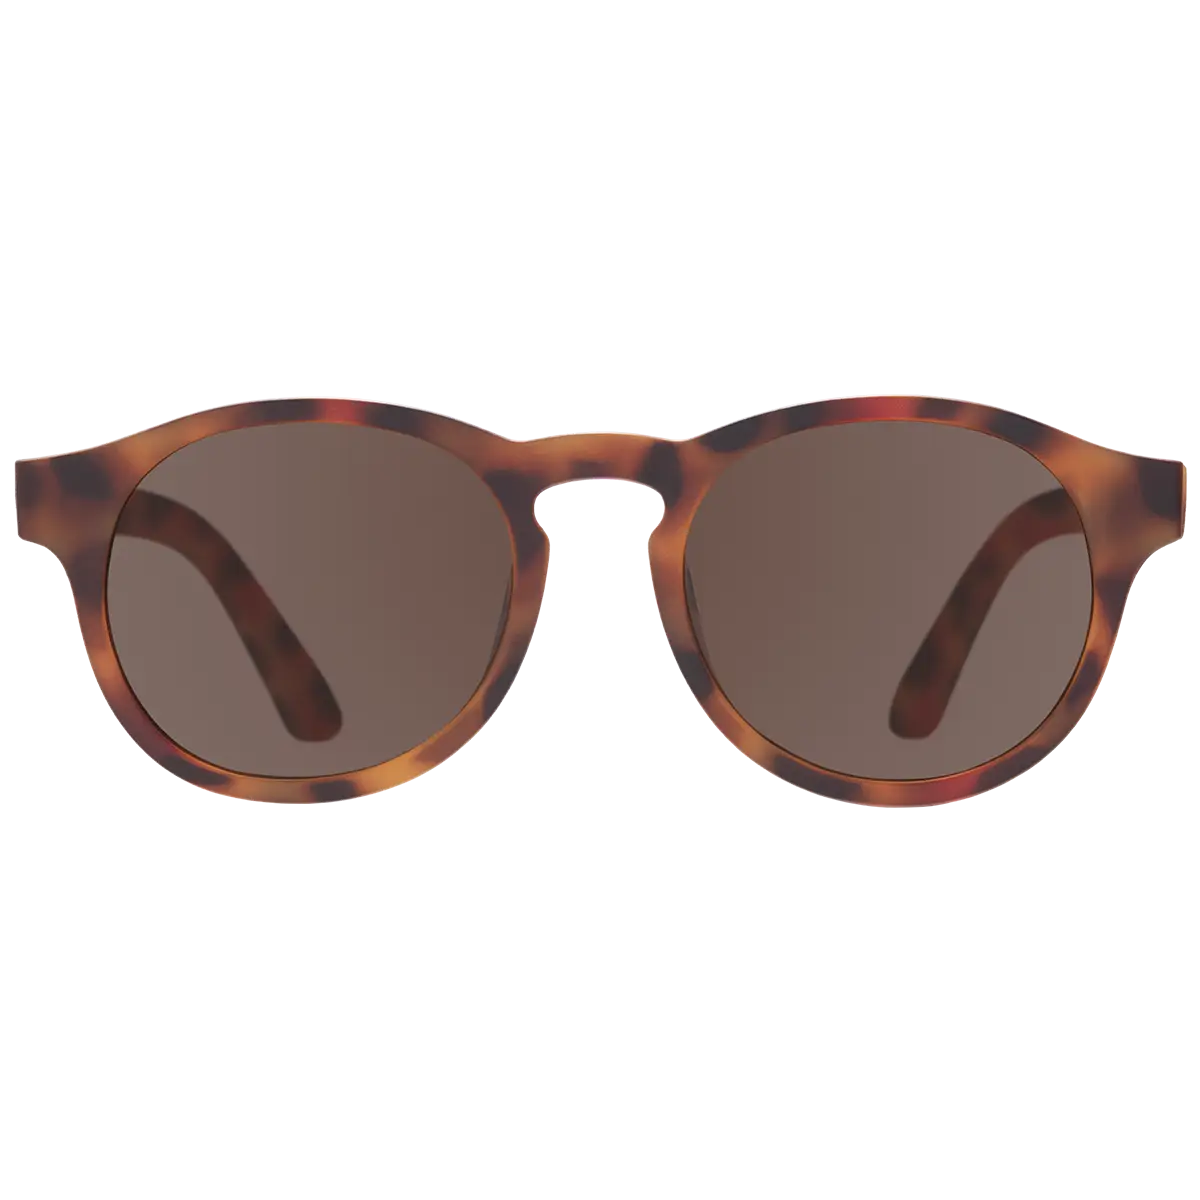 Limited Edition - Tortoise Shell Keyhole Sunglasses